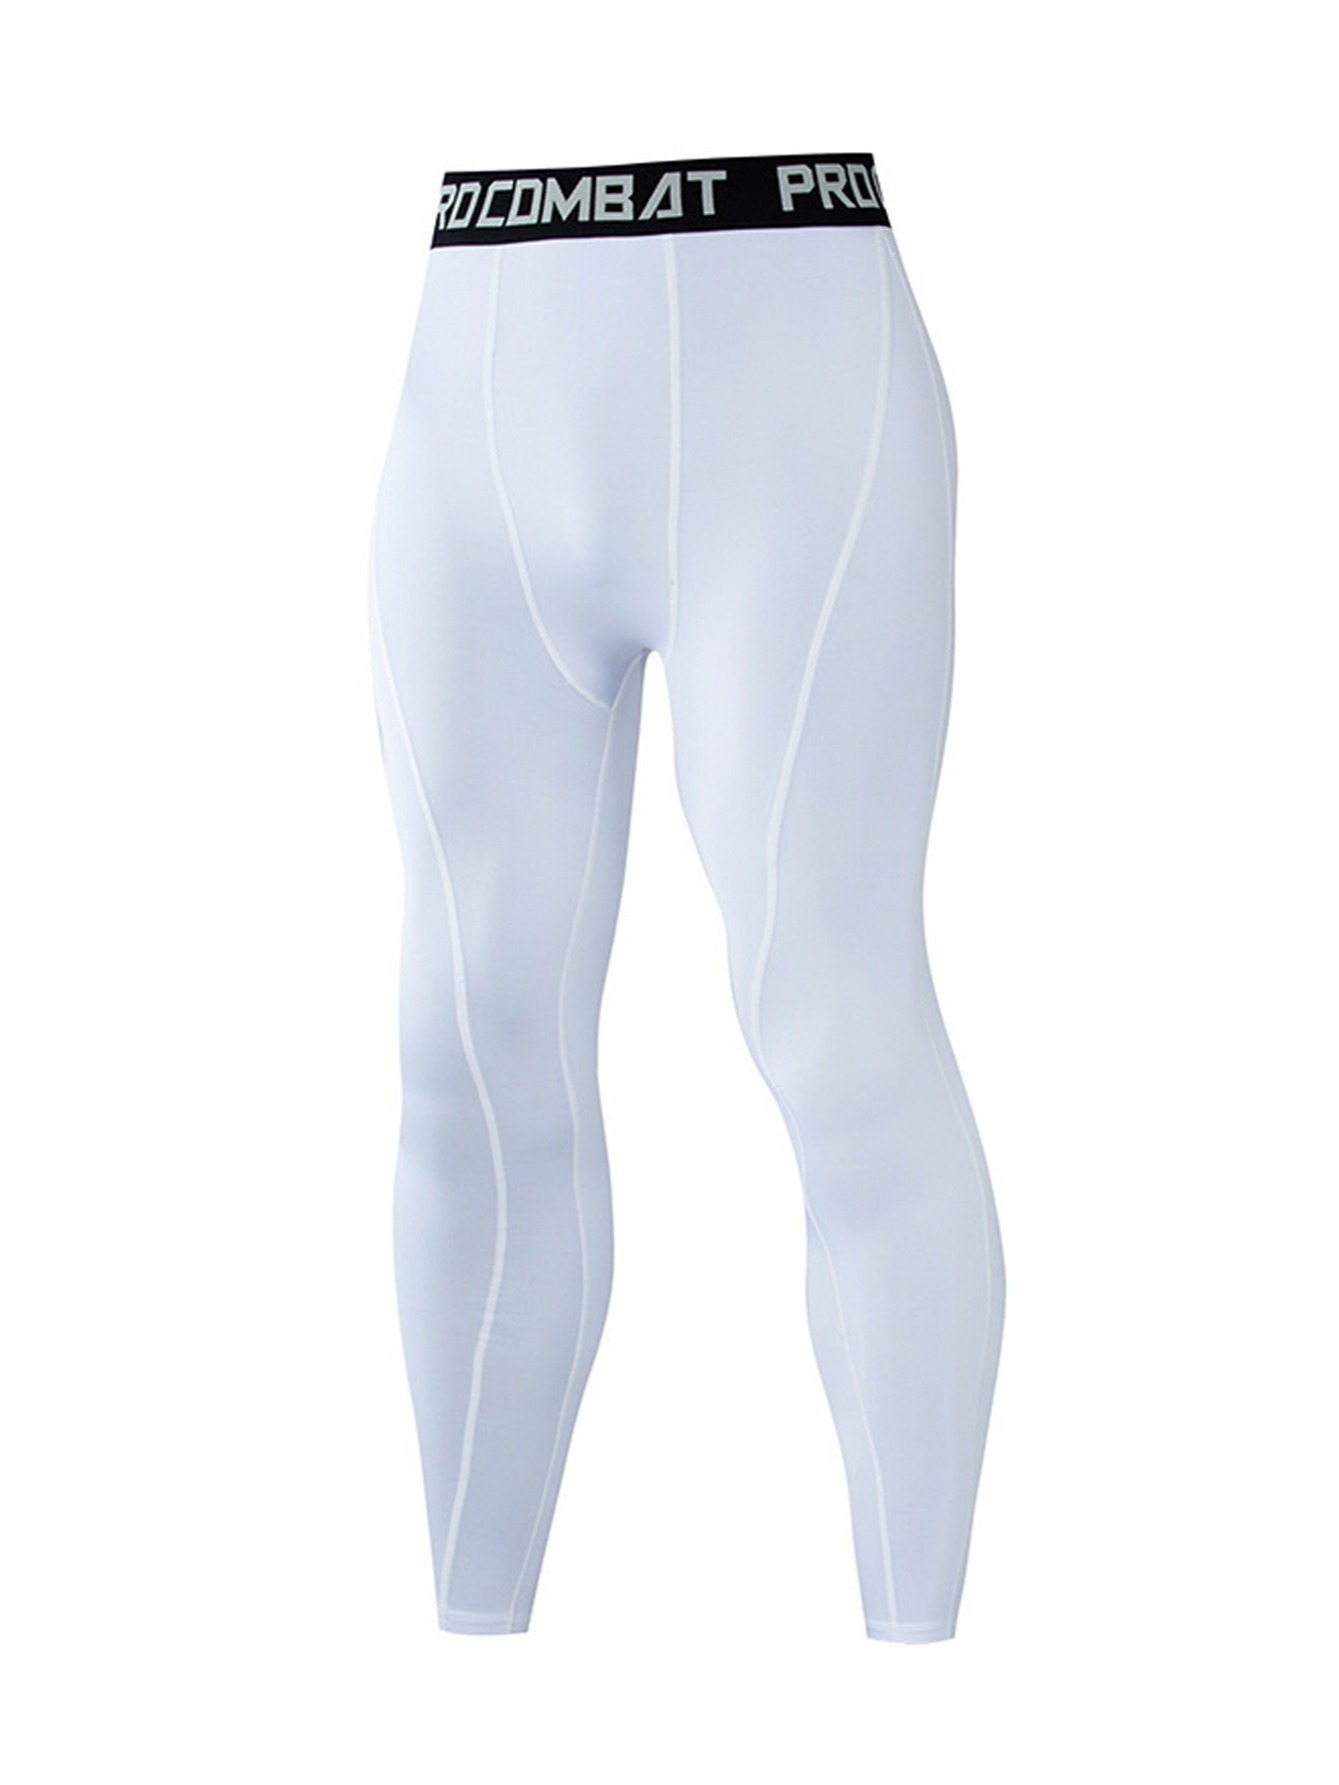  WRAGCFM Mens Leggings Pack,Mens Active White Compression  Tights Pants Quick Dry Running Leggings For Men Workout Athletic Gym  Leggings